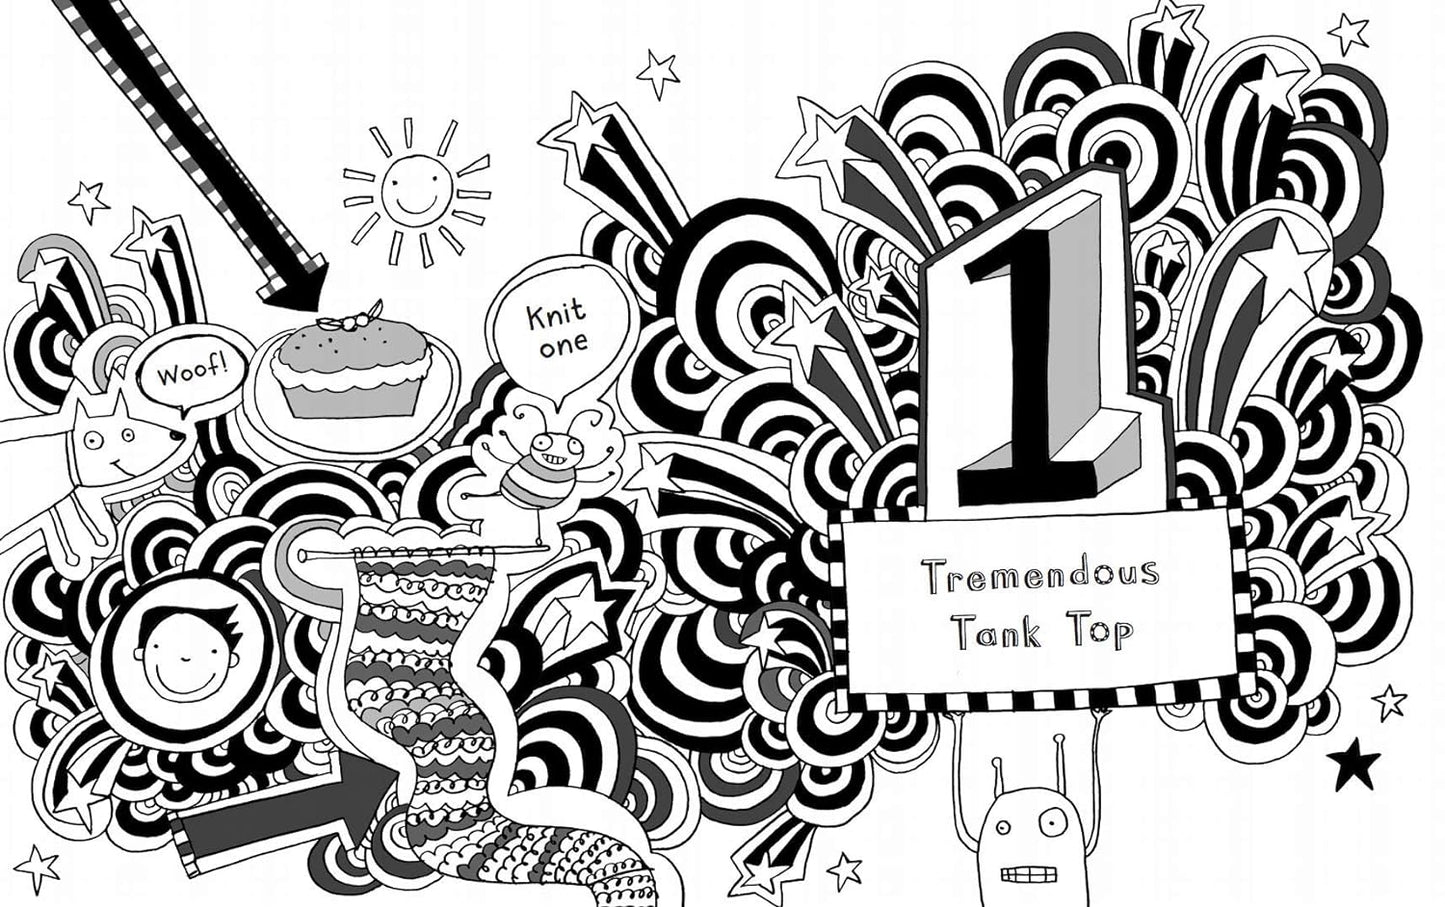 Tom Gates: Ten Tremendous Tales